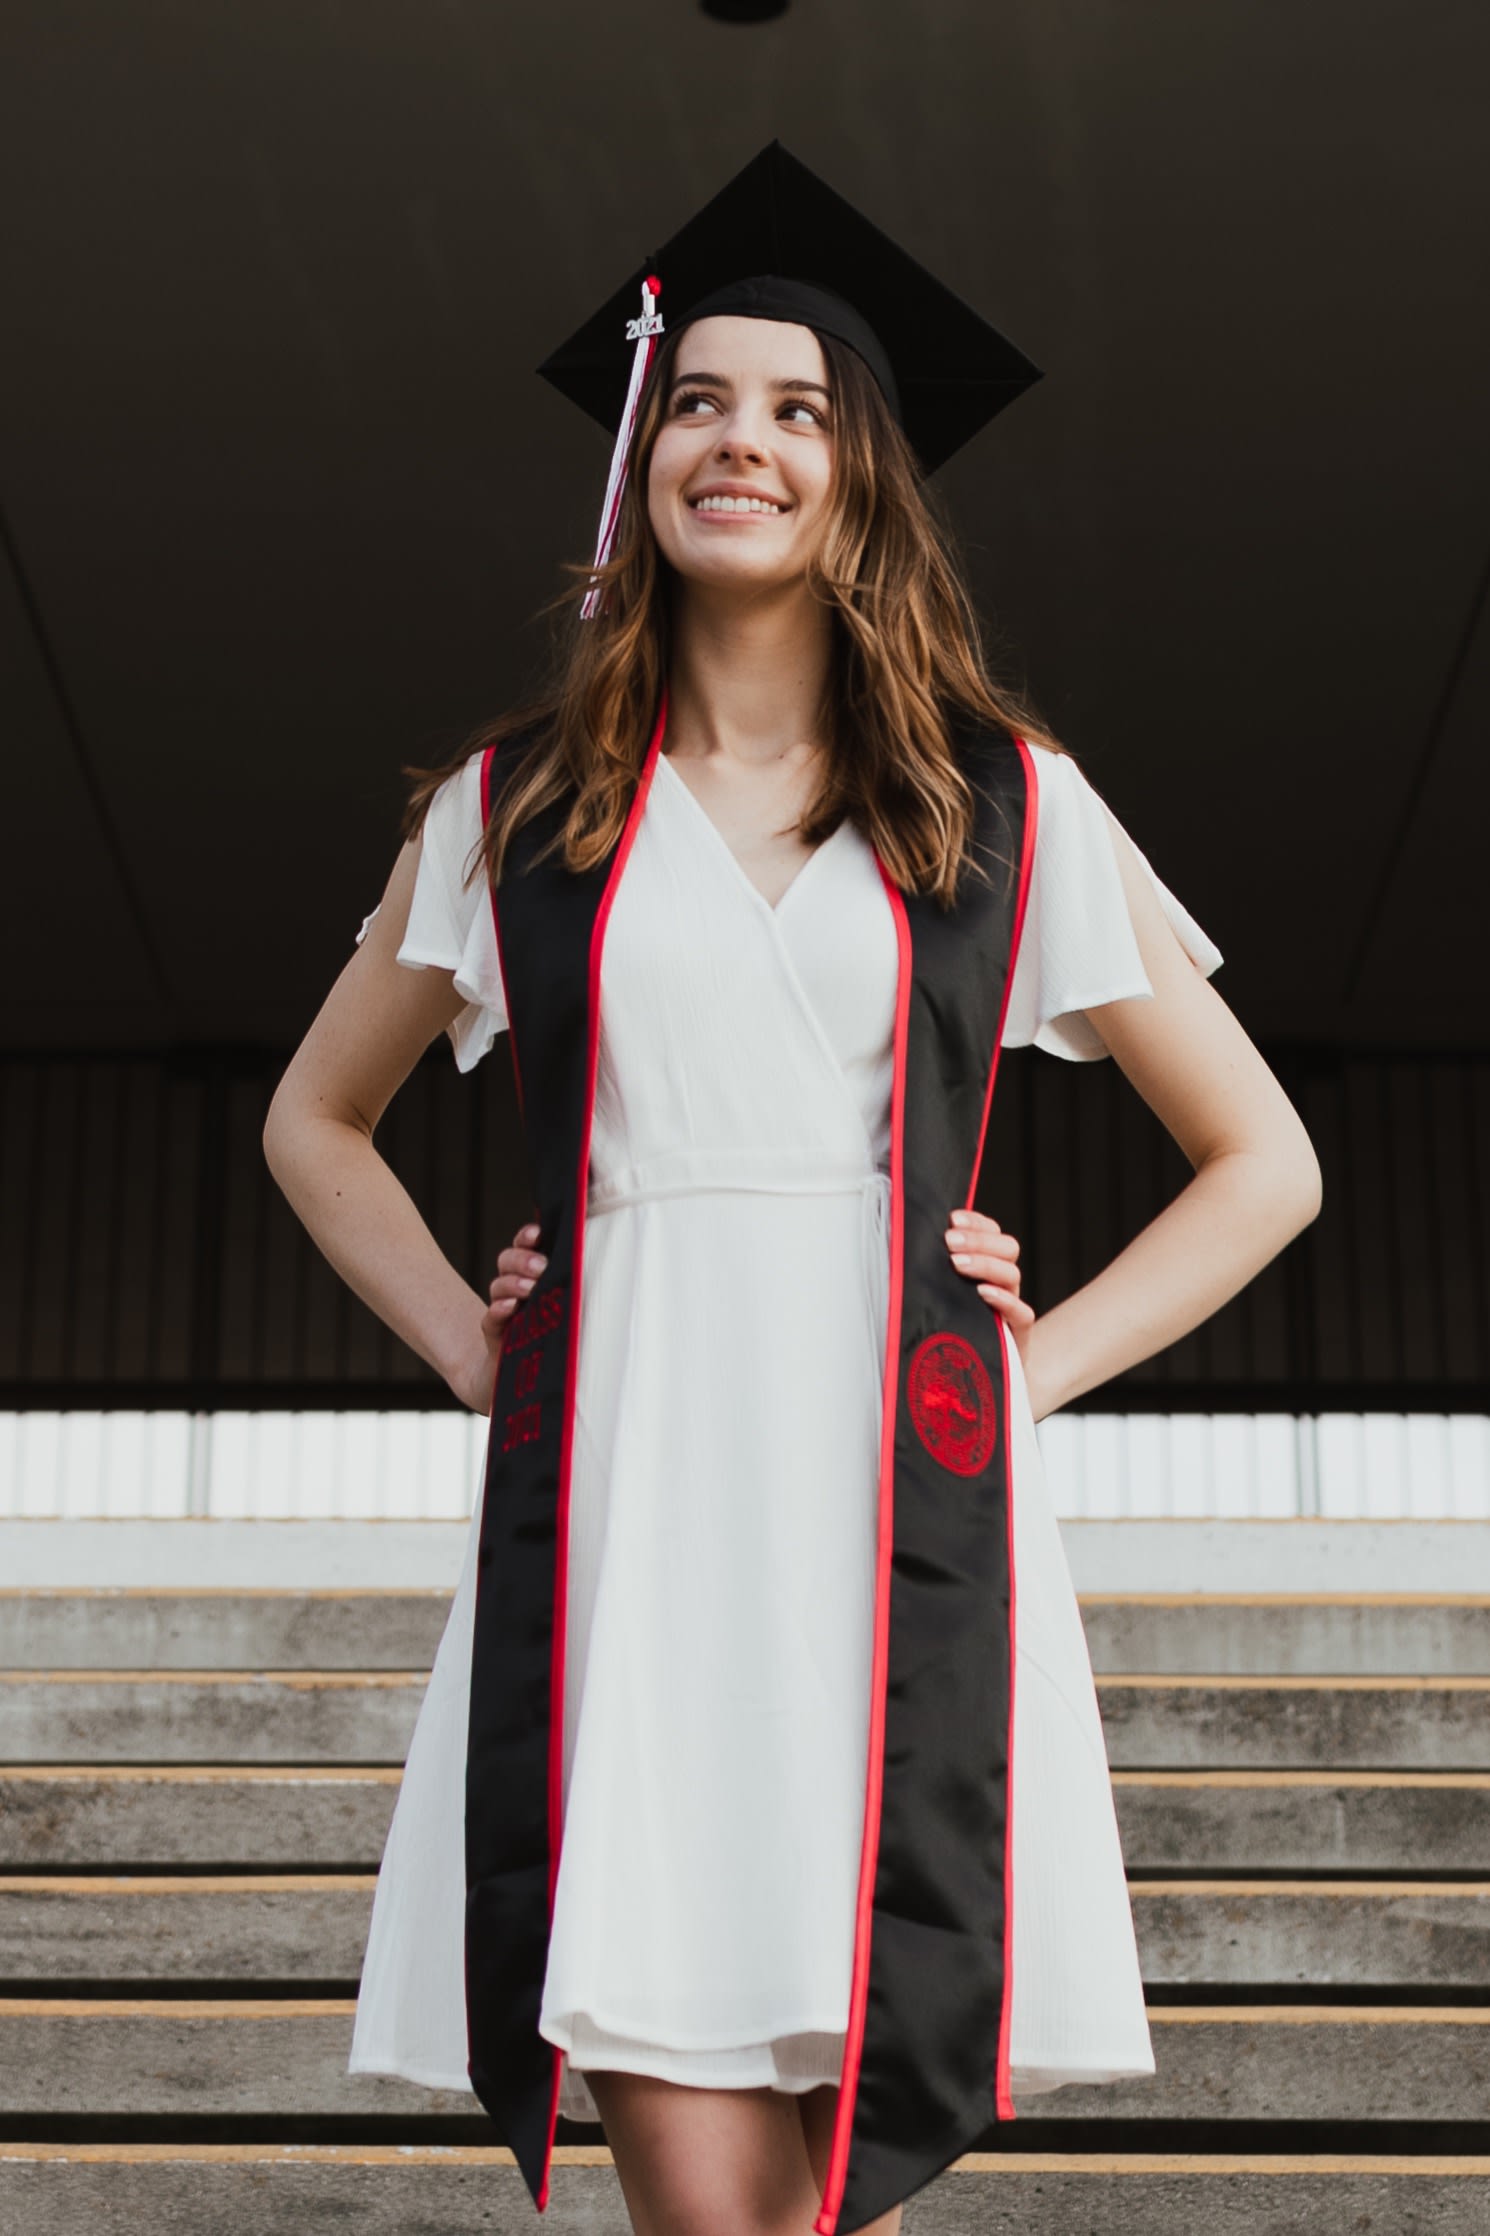 Dress Code for High School Graduations | LoveToKnow